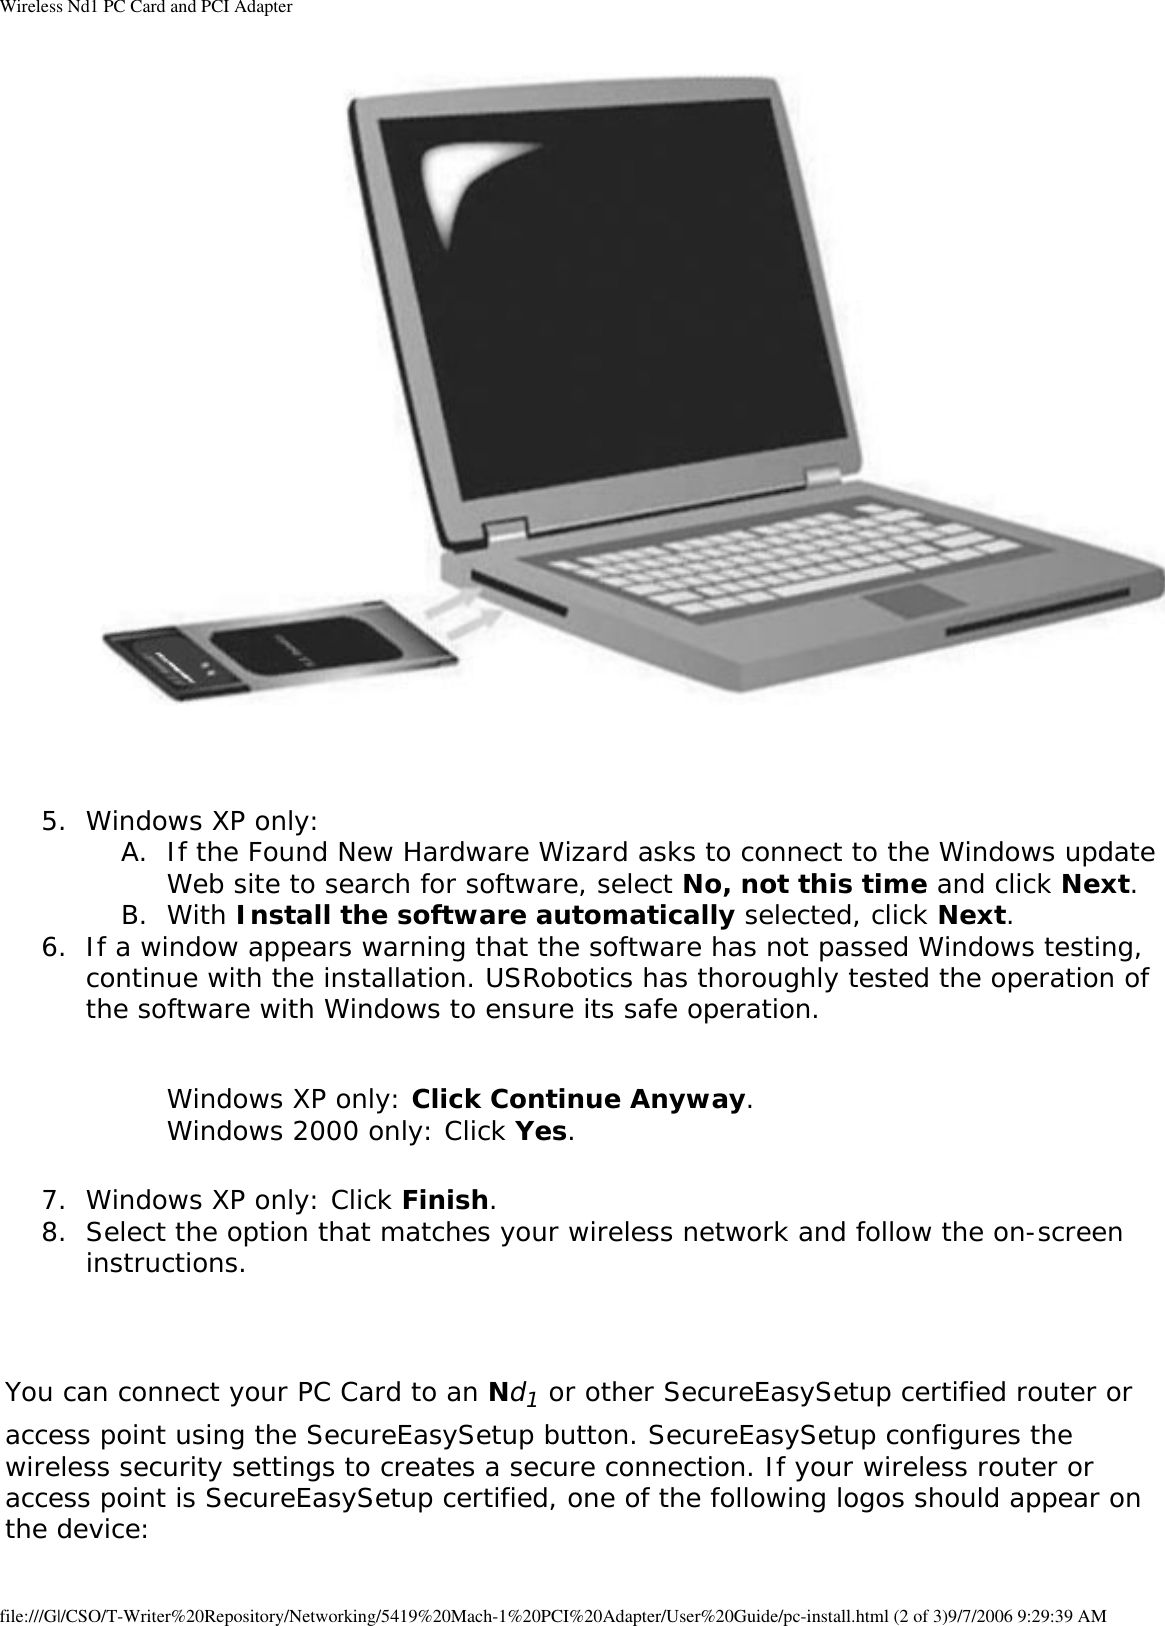 Page 7 of GemTek Technology C950622G Wireless Nd1 PC Card User Manual Wireless Nd1 PC Card and PCI Adapter